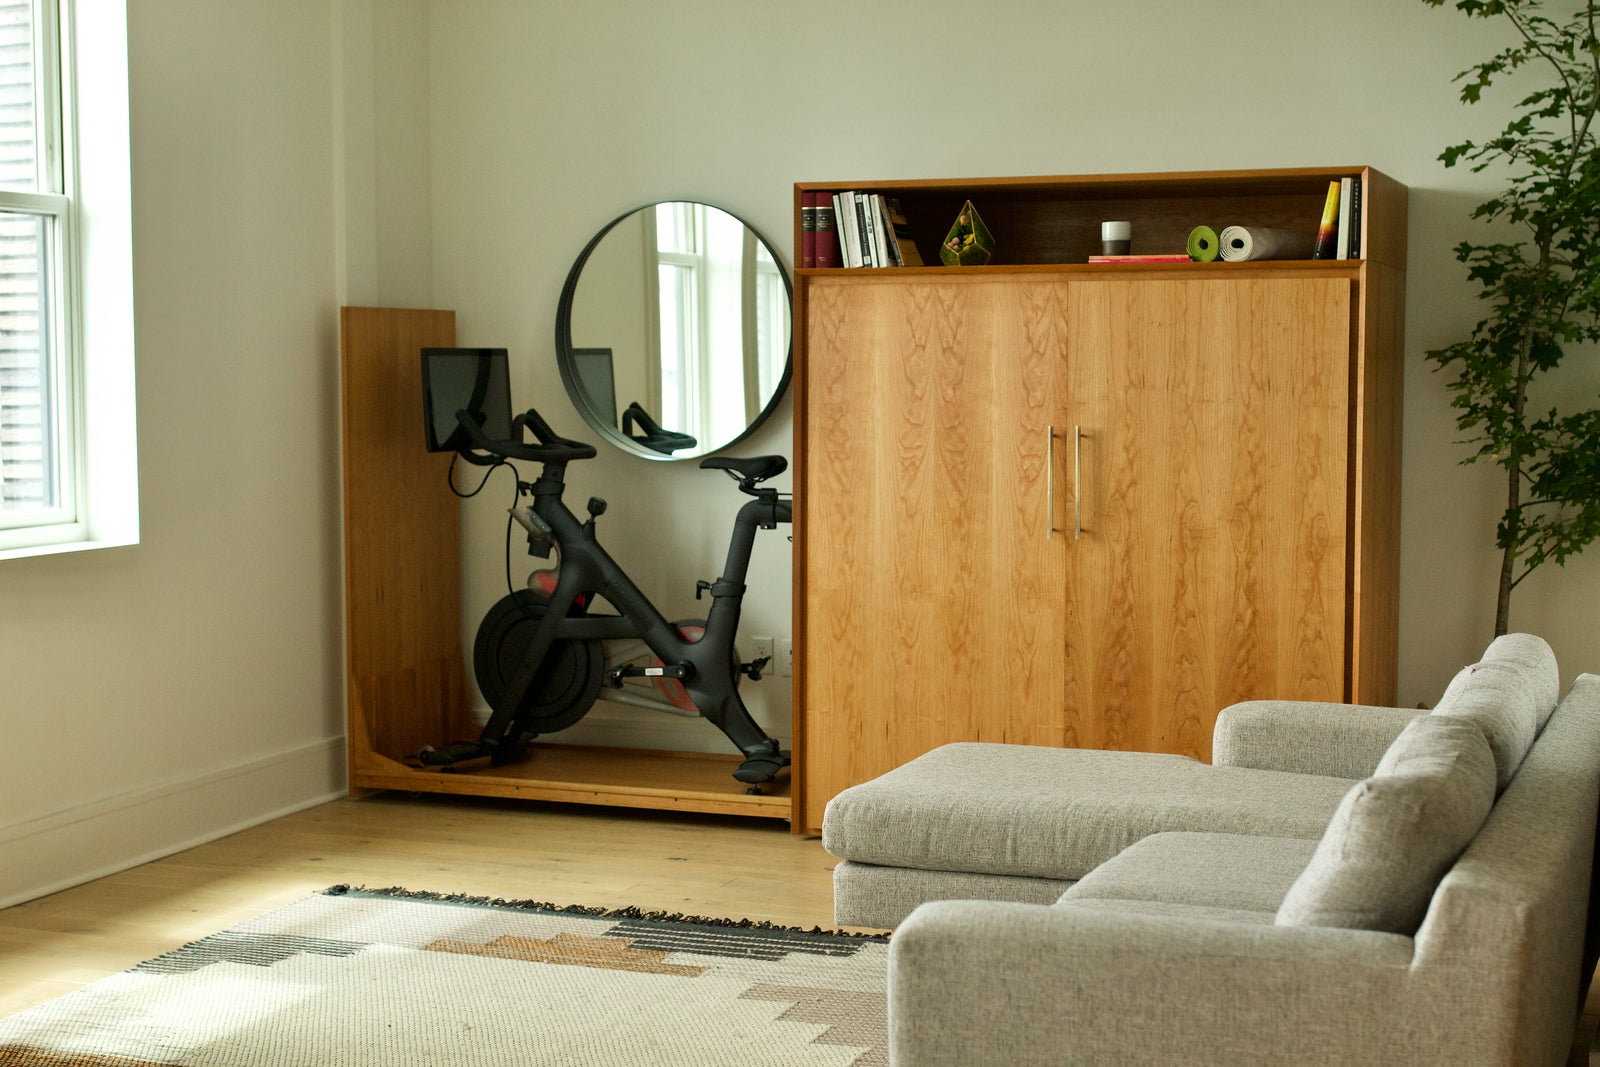 boitier - home-gym furniture